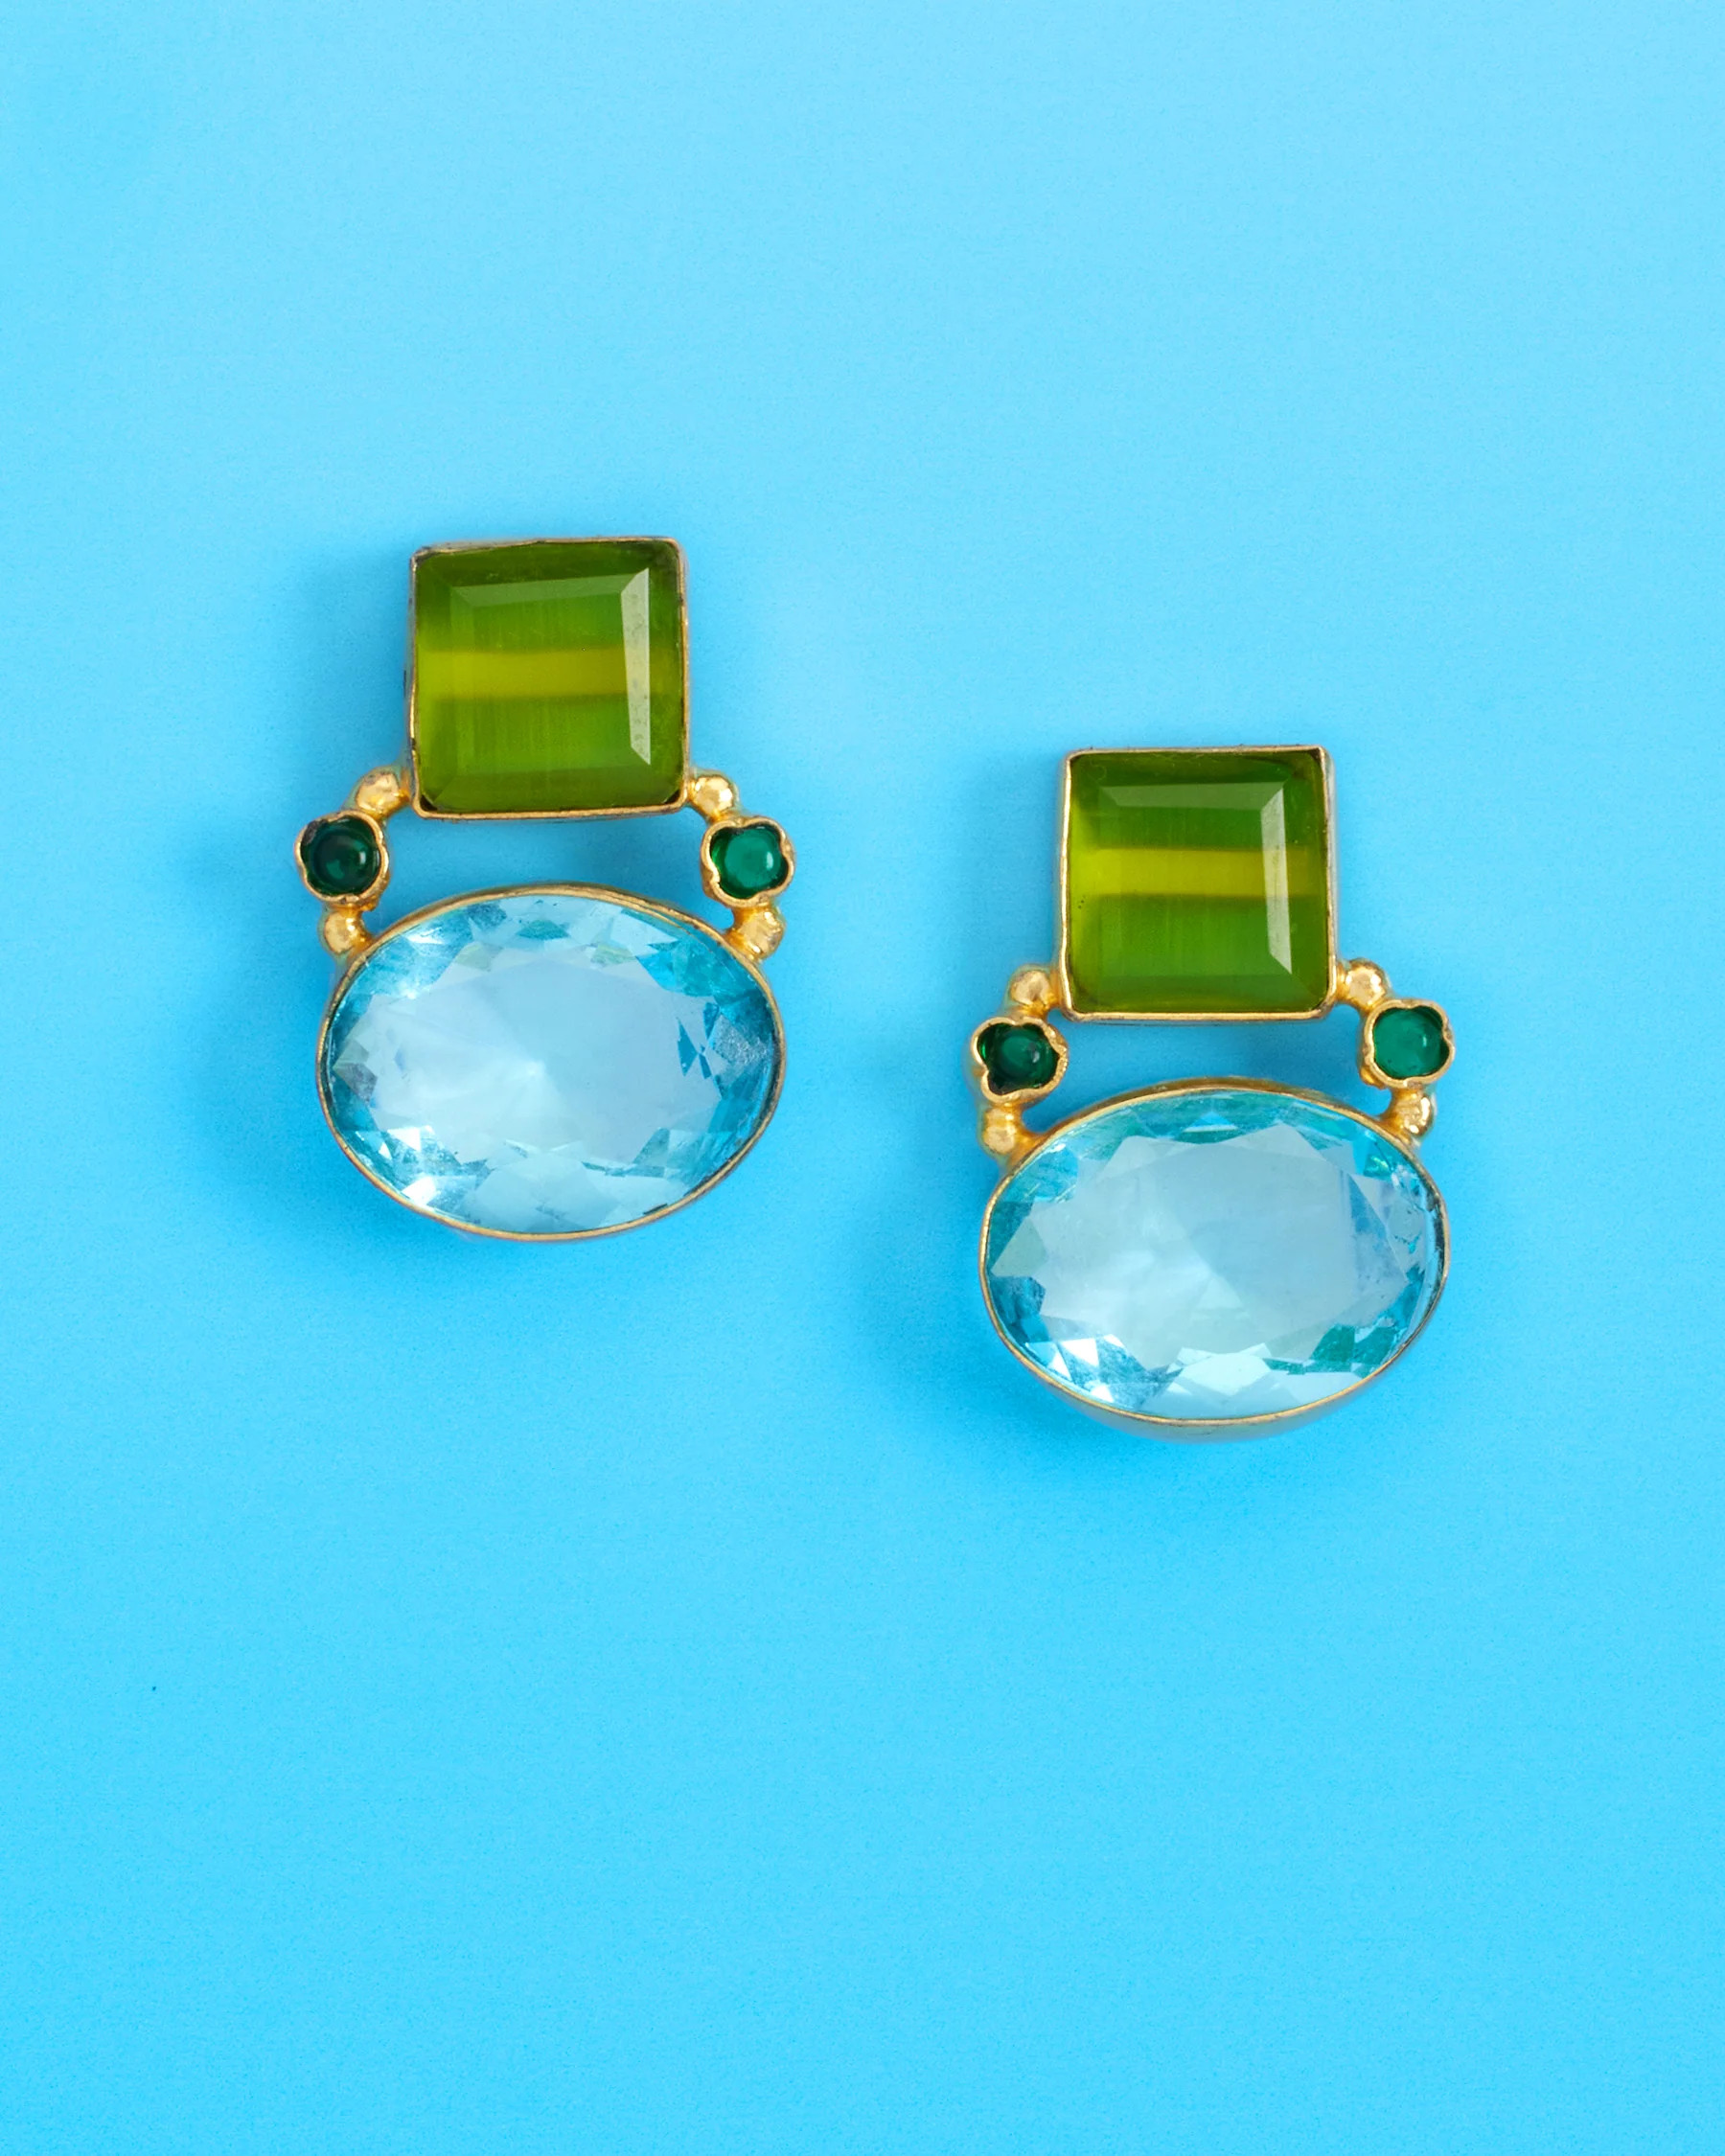 Berkley Geometric Earrings in Turquoise and Lime | NICOBLU